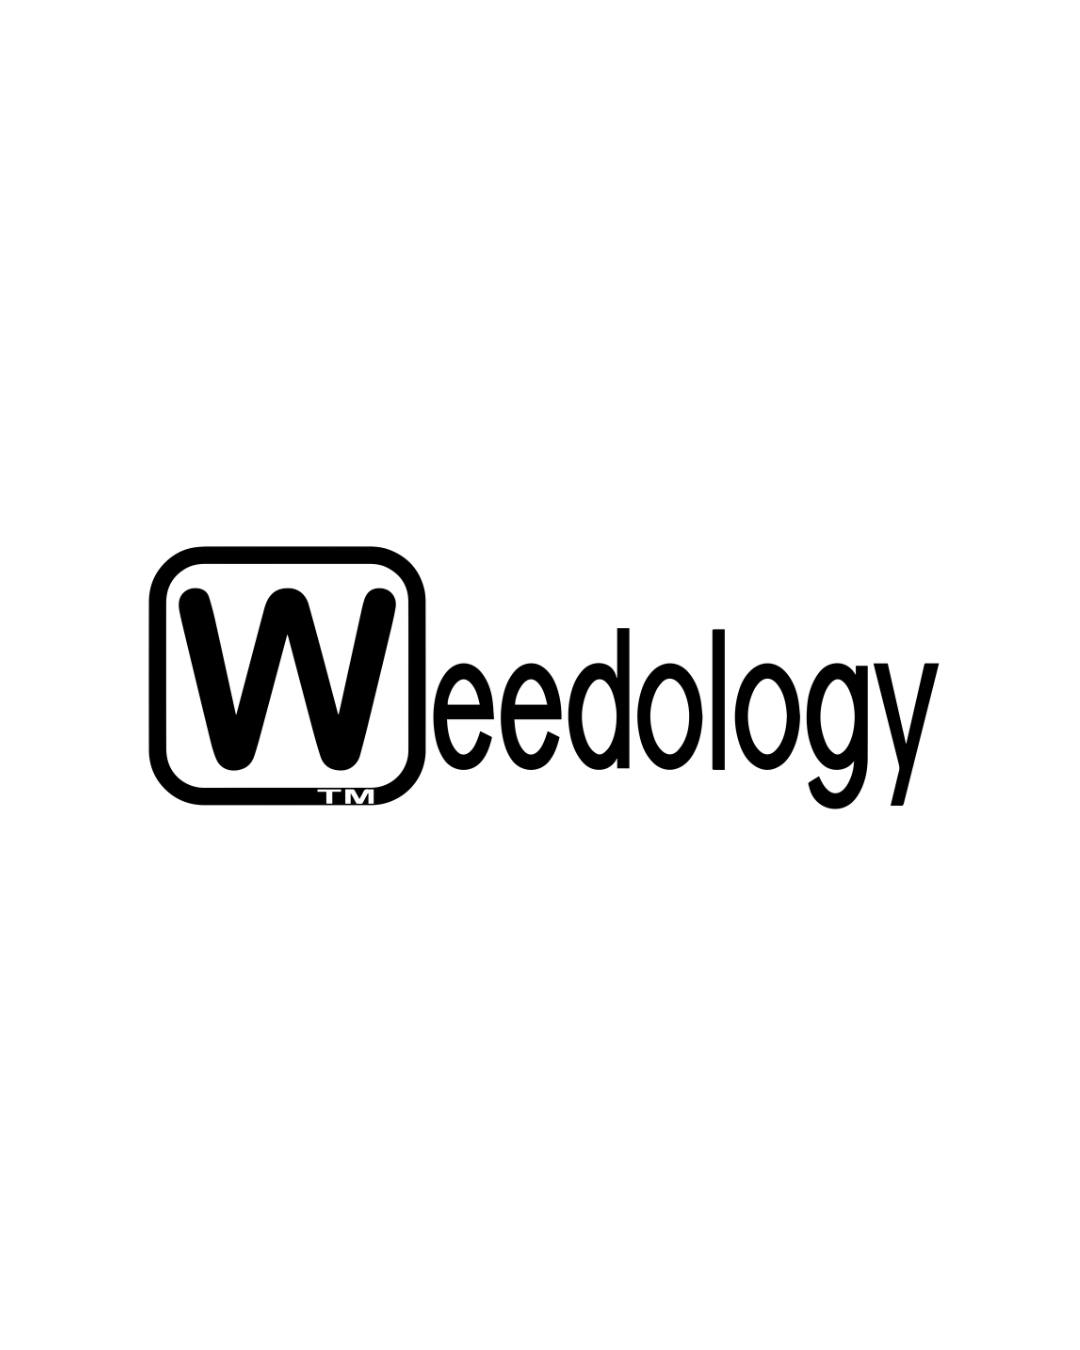 Weedology logo